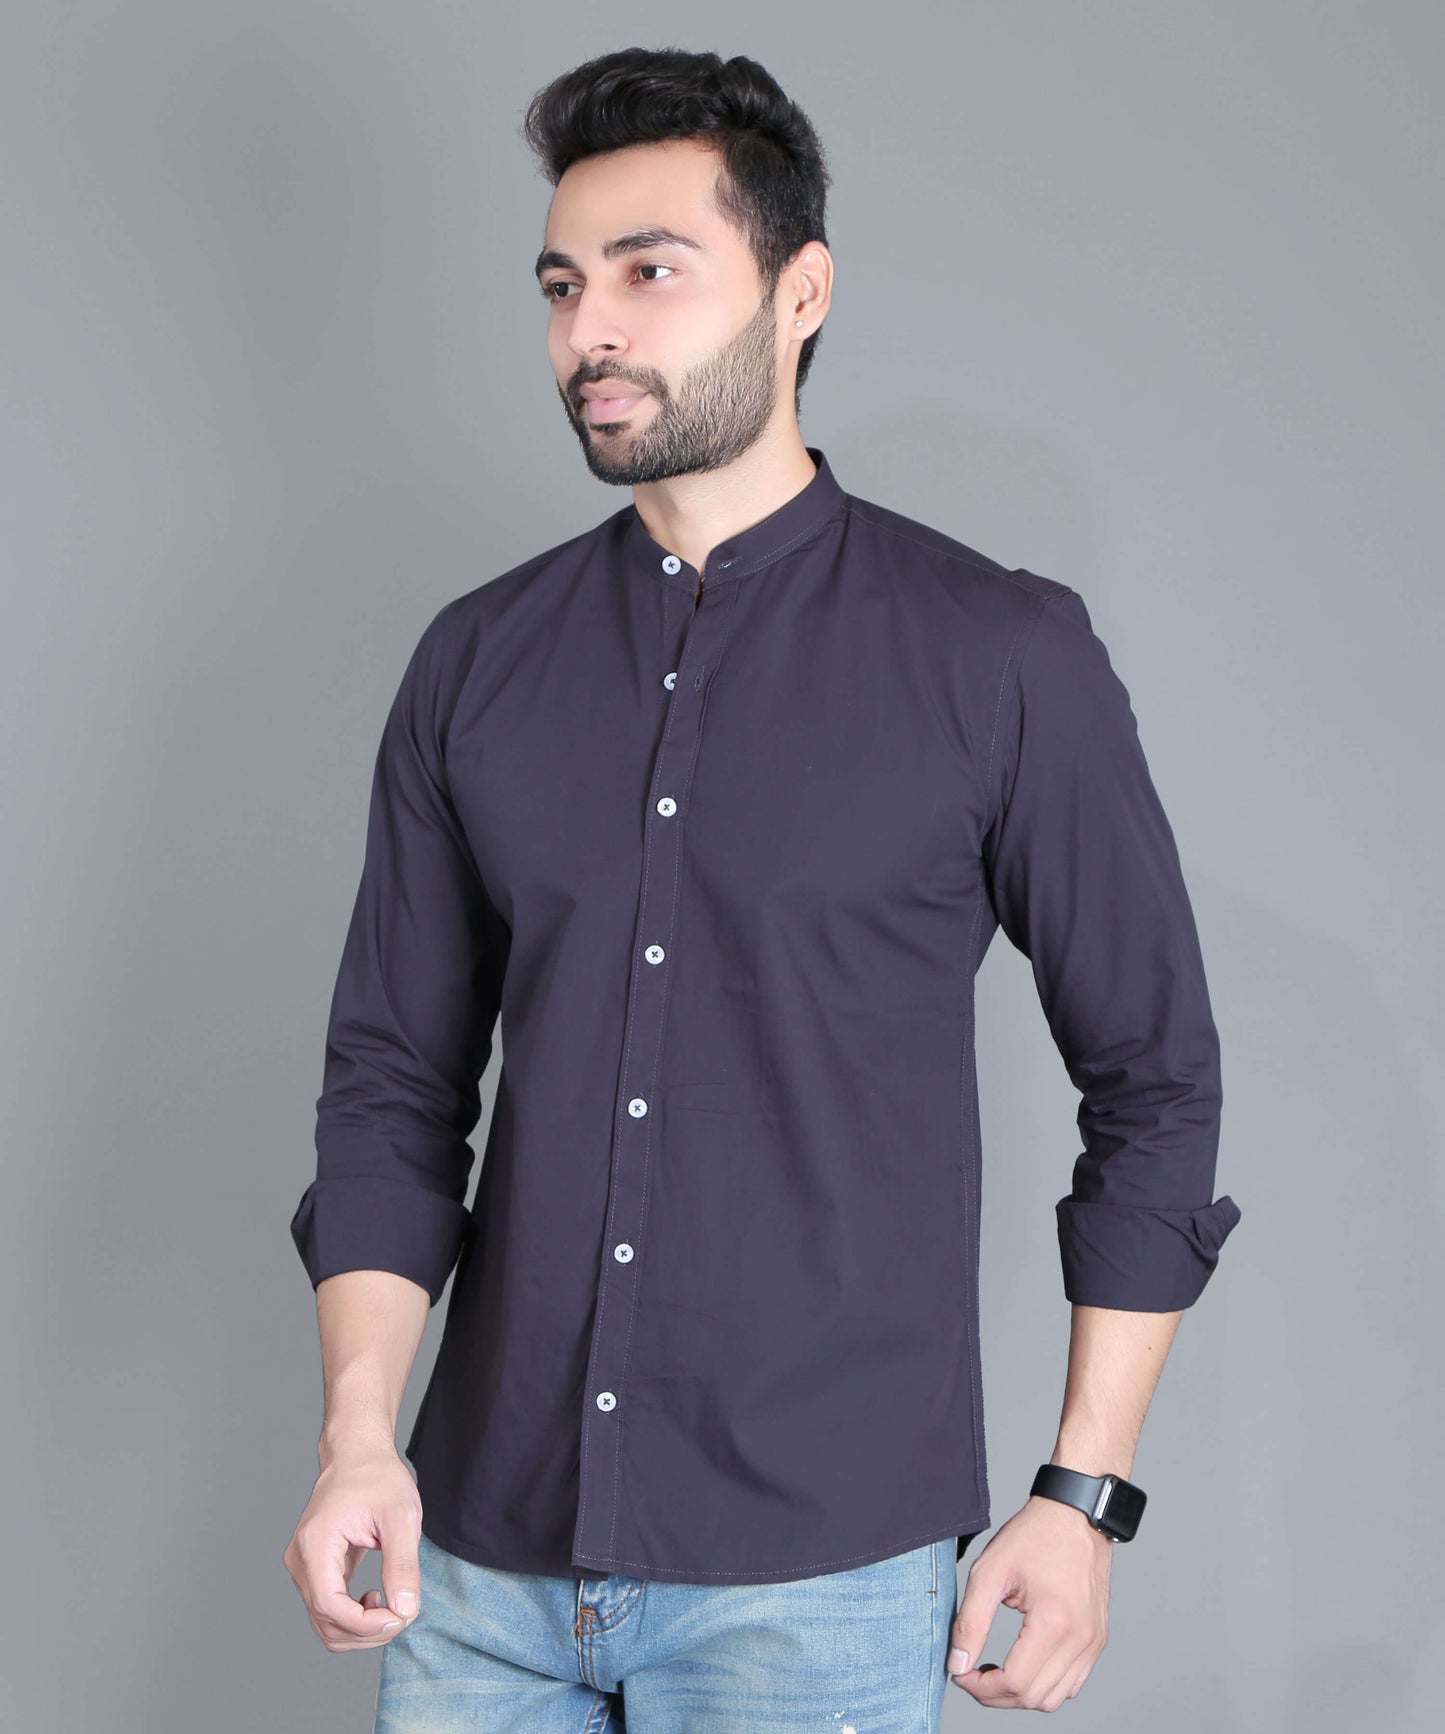 5thanfold Men's Casual Dark Grey Full Sleeve Pure Cotton Mandarin Collar Shirt (No Pocket)